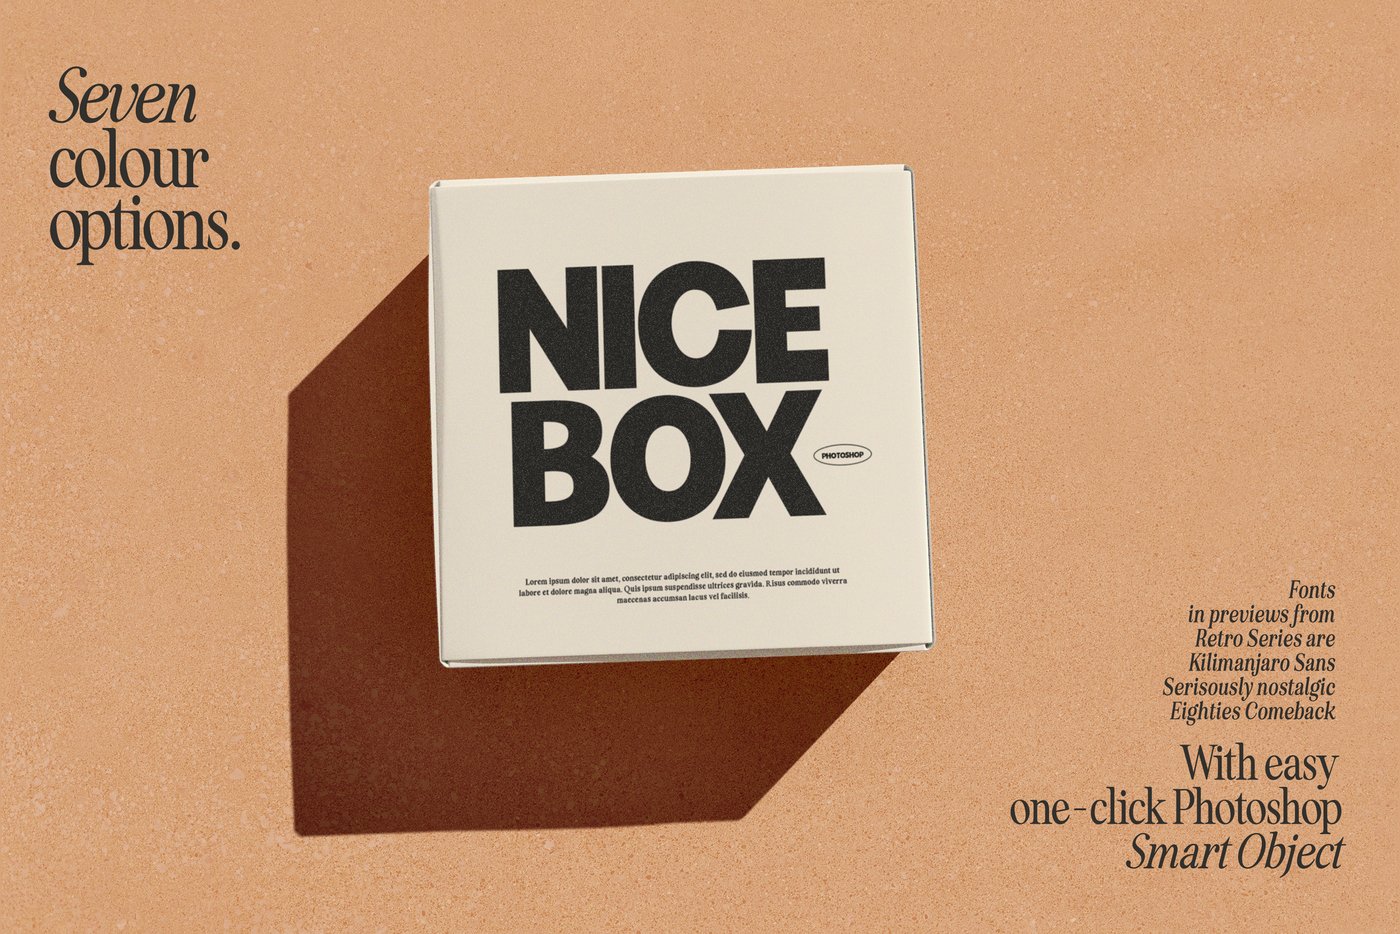 Nice Box! Photoshop Mockup main product image by Nicky Laatz